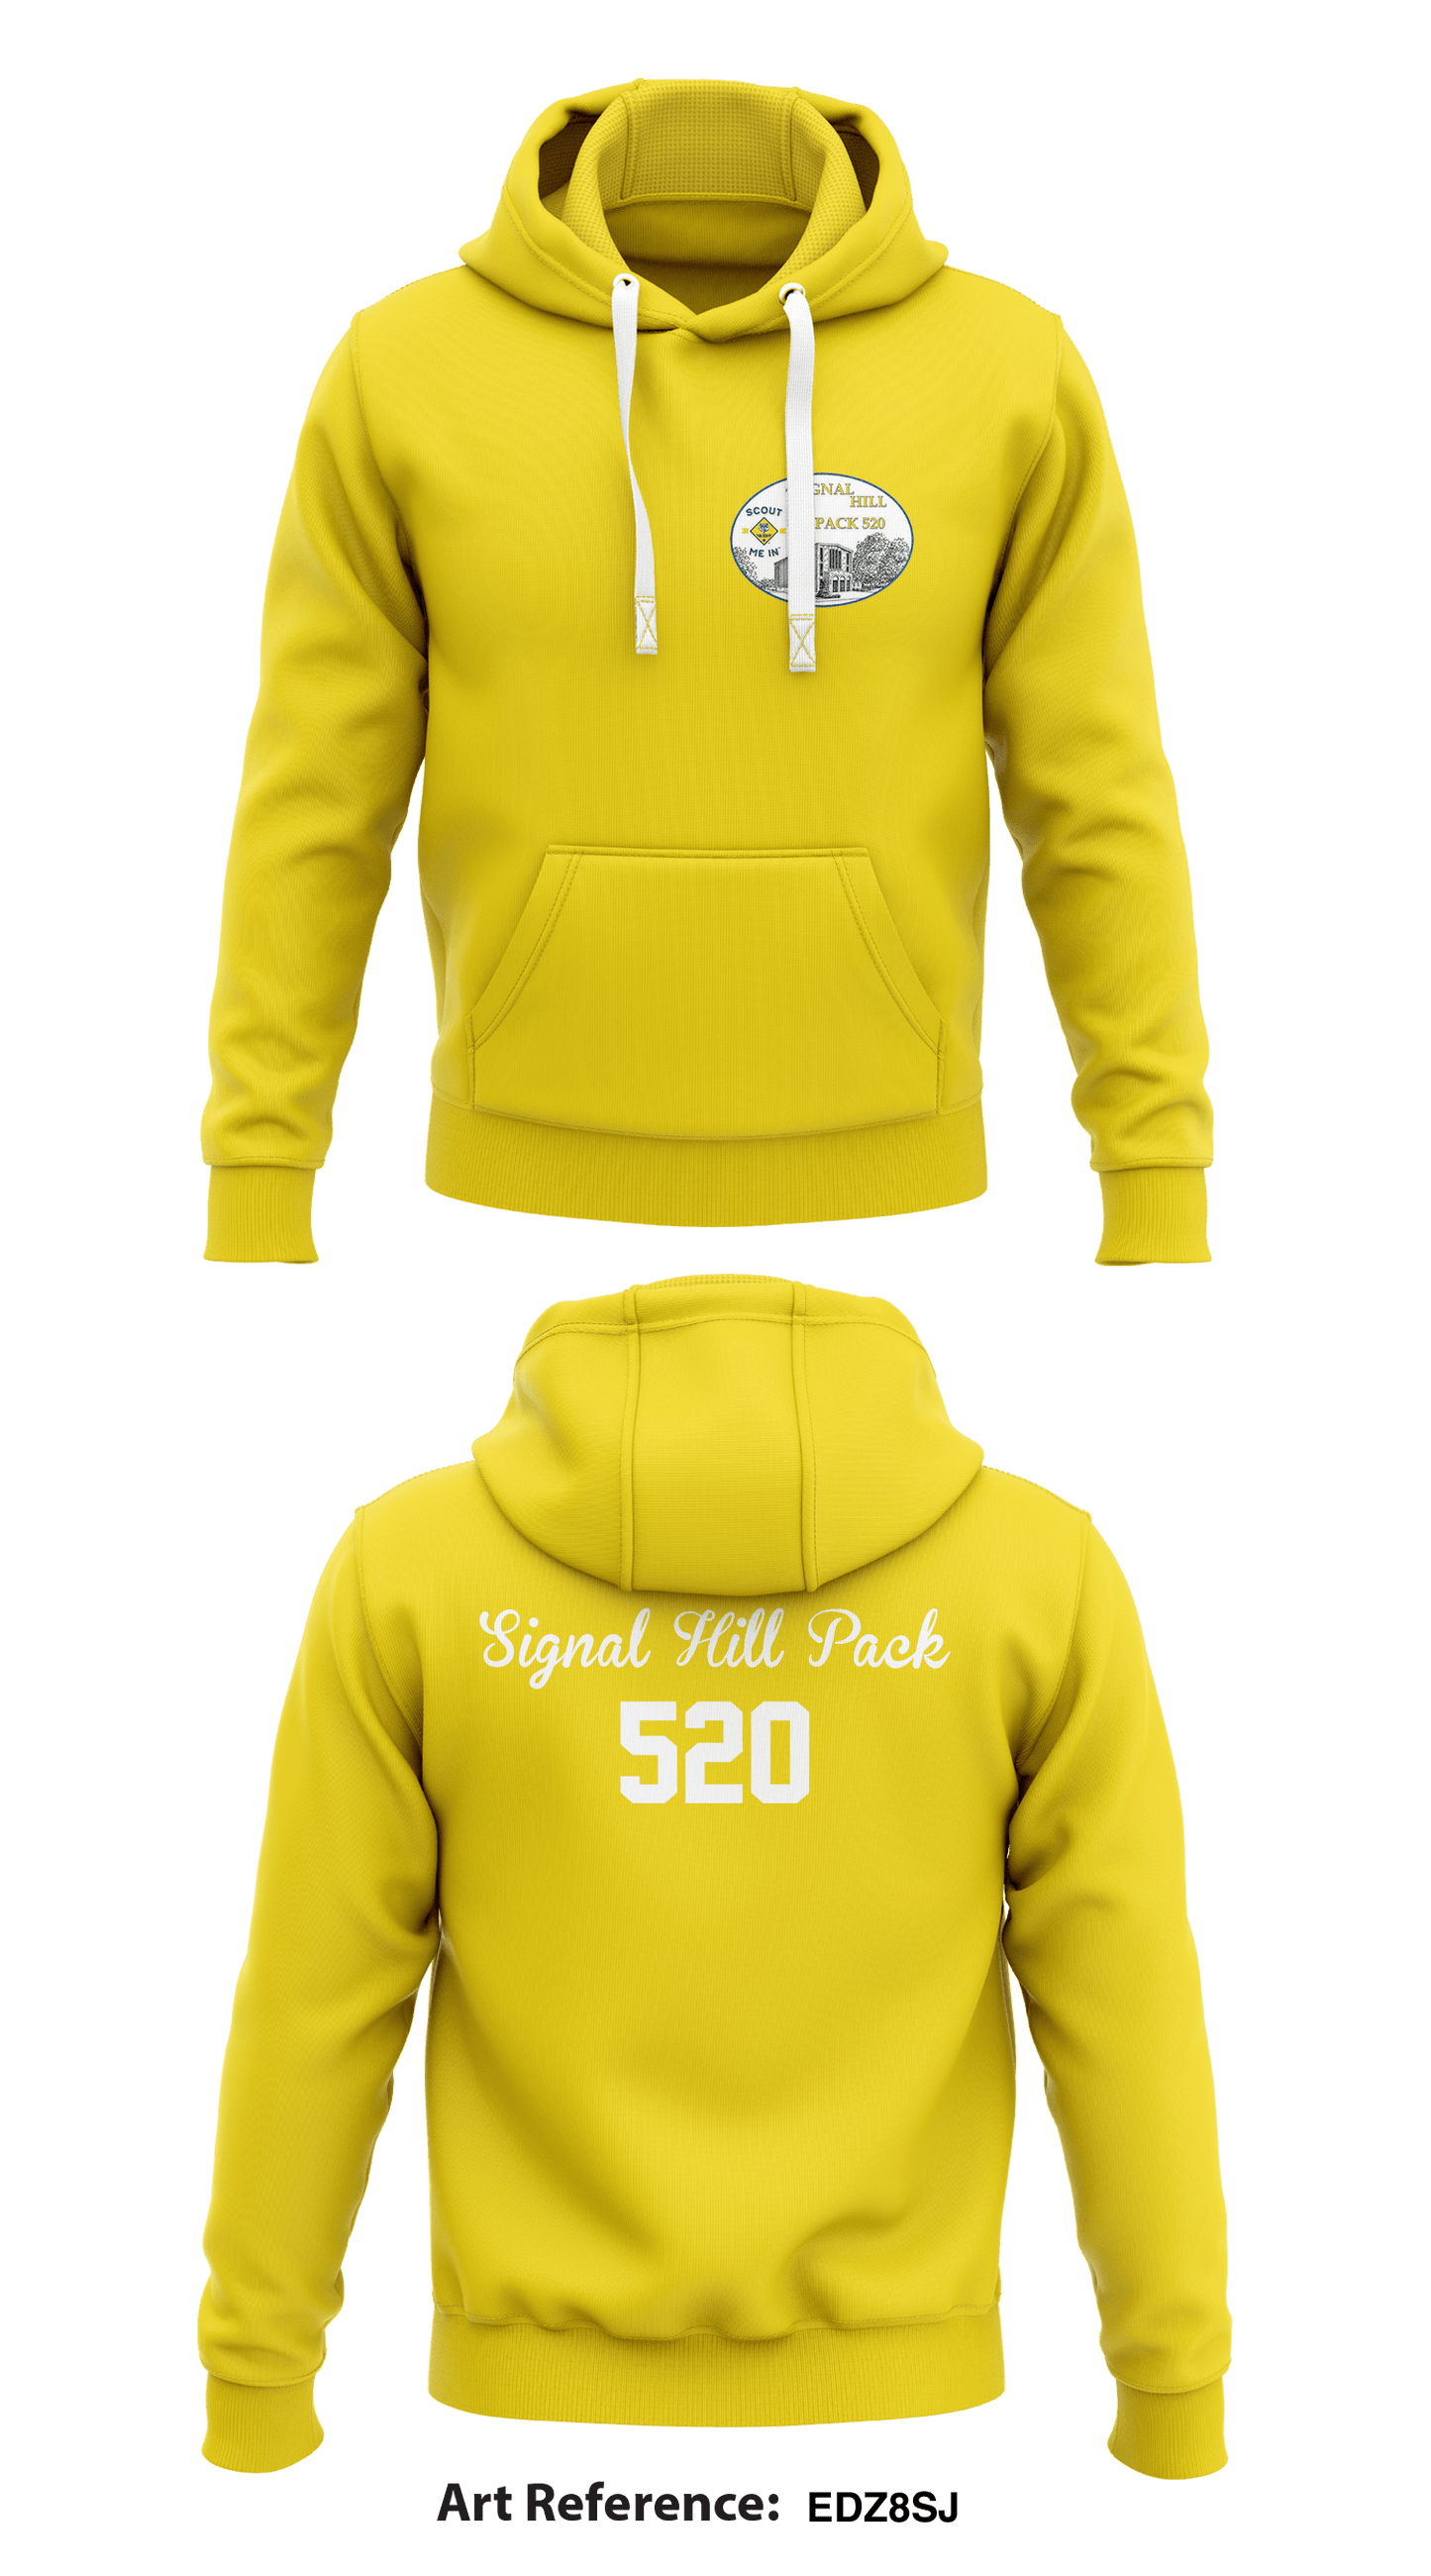 Signal Hill Pack 52 Store 1 Core Men's Hooded Performance Sweatshirt - eDz8Sj